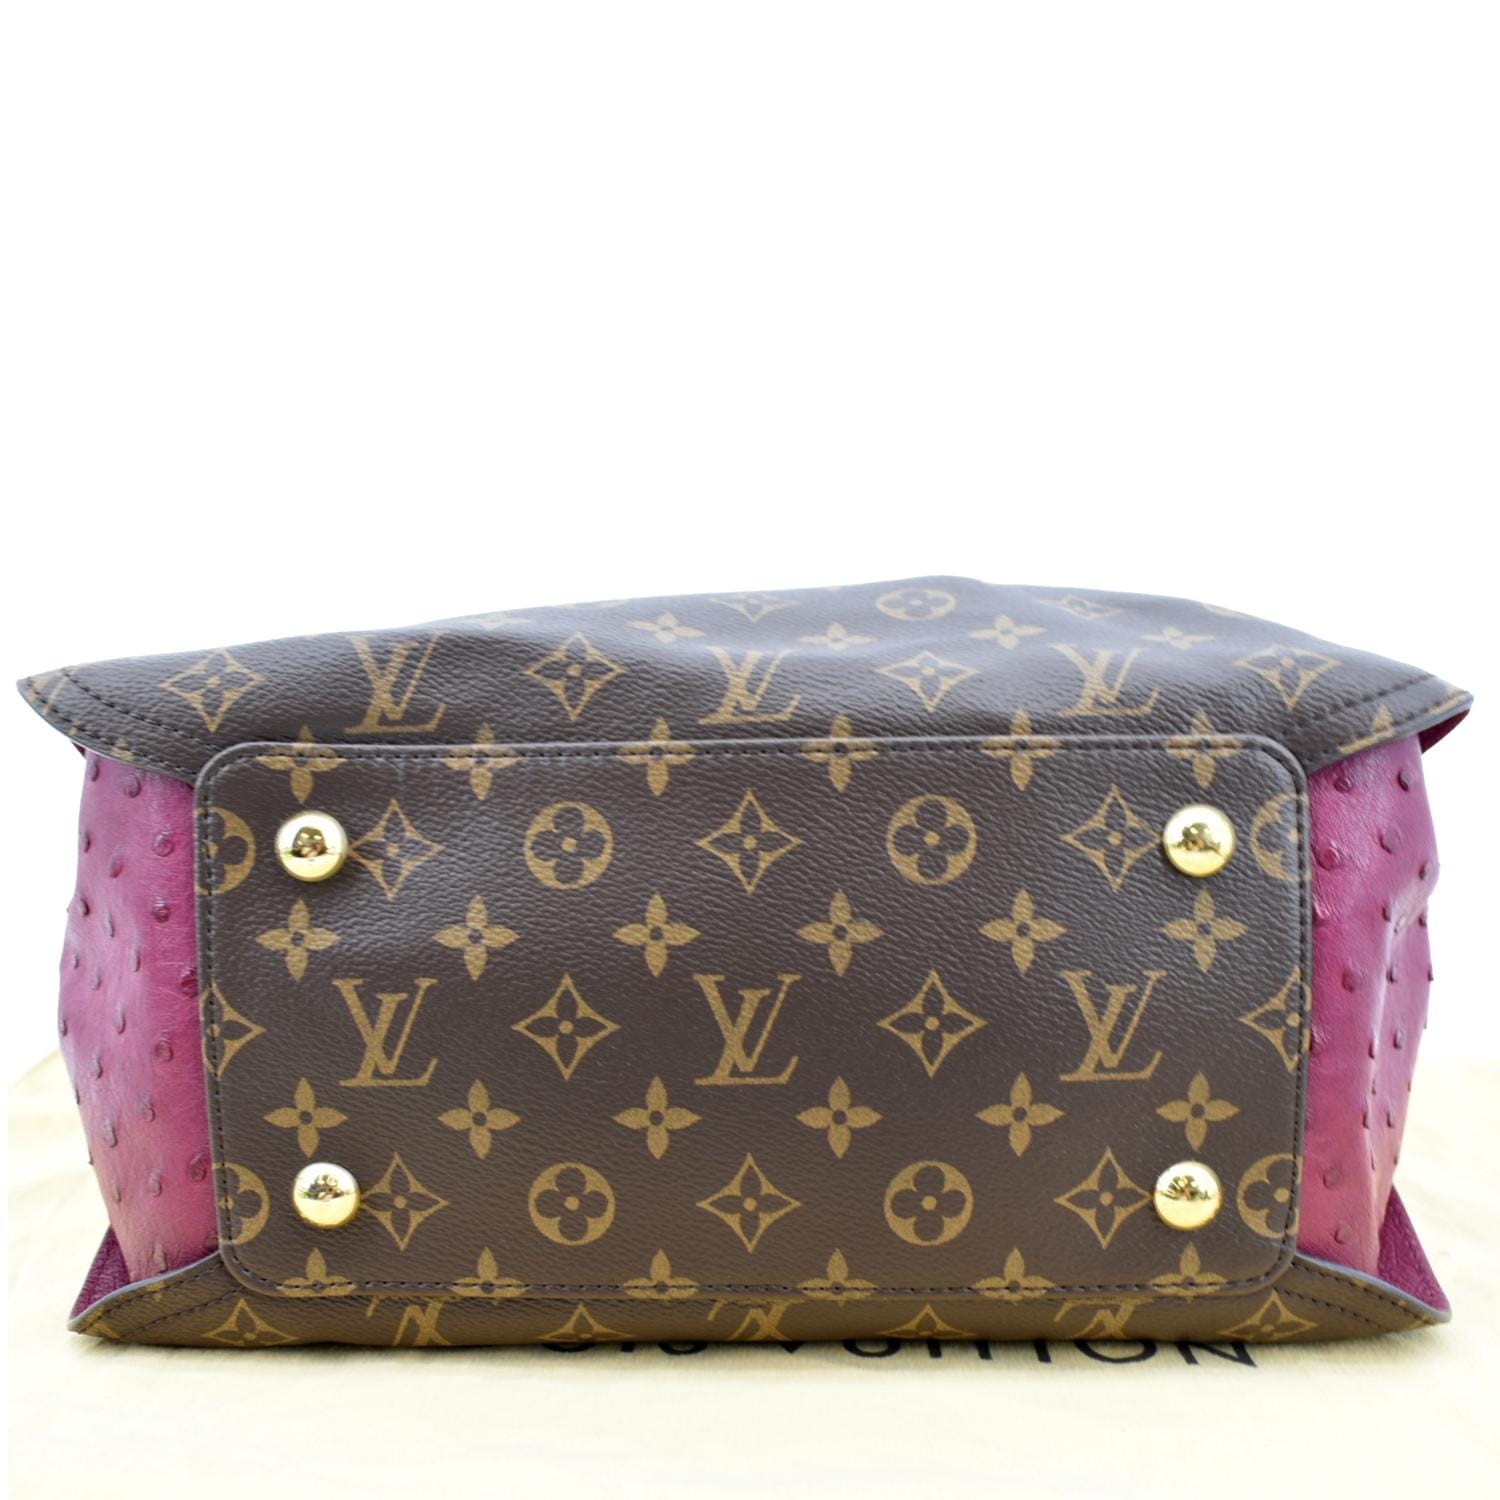 Montaigne ostrich handbag Louis Vuitton Multicolour in Ostrich